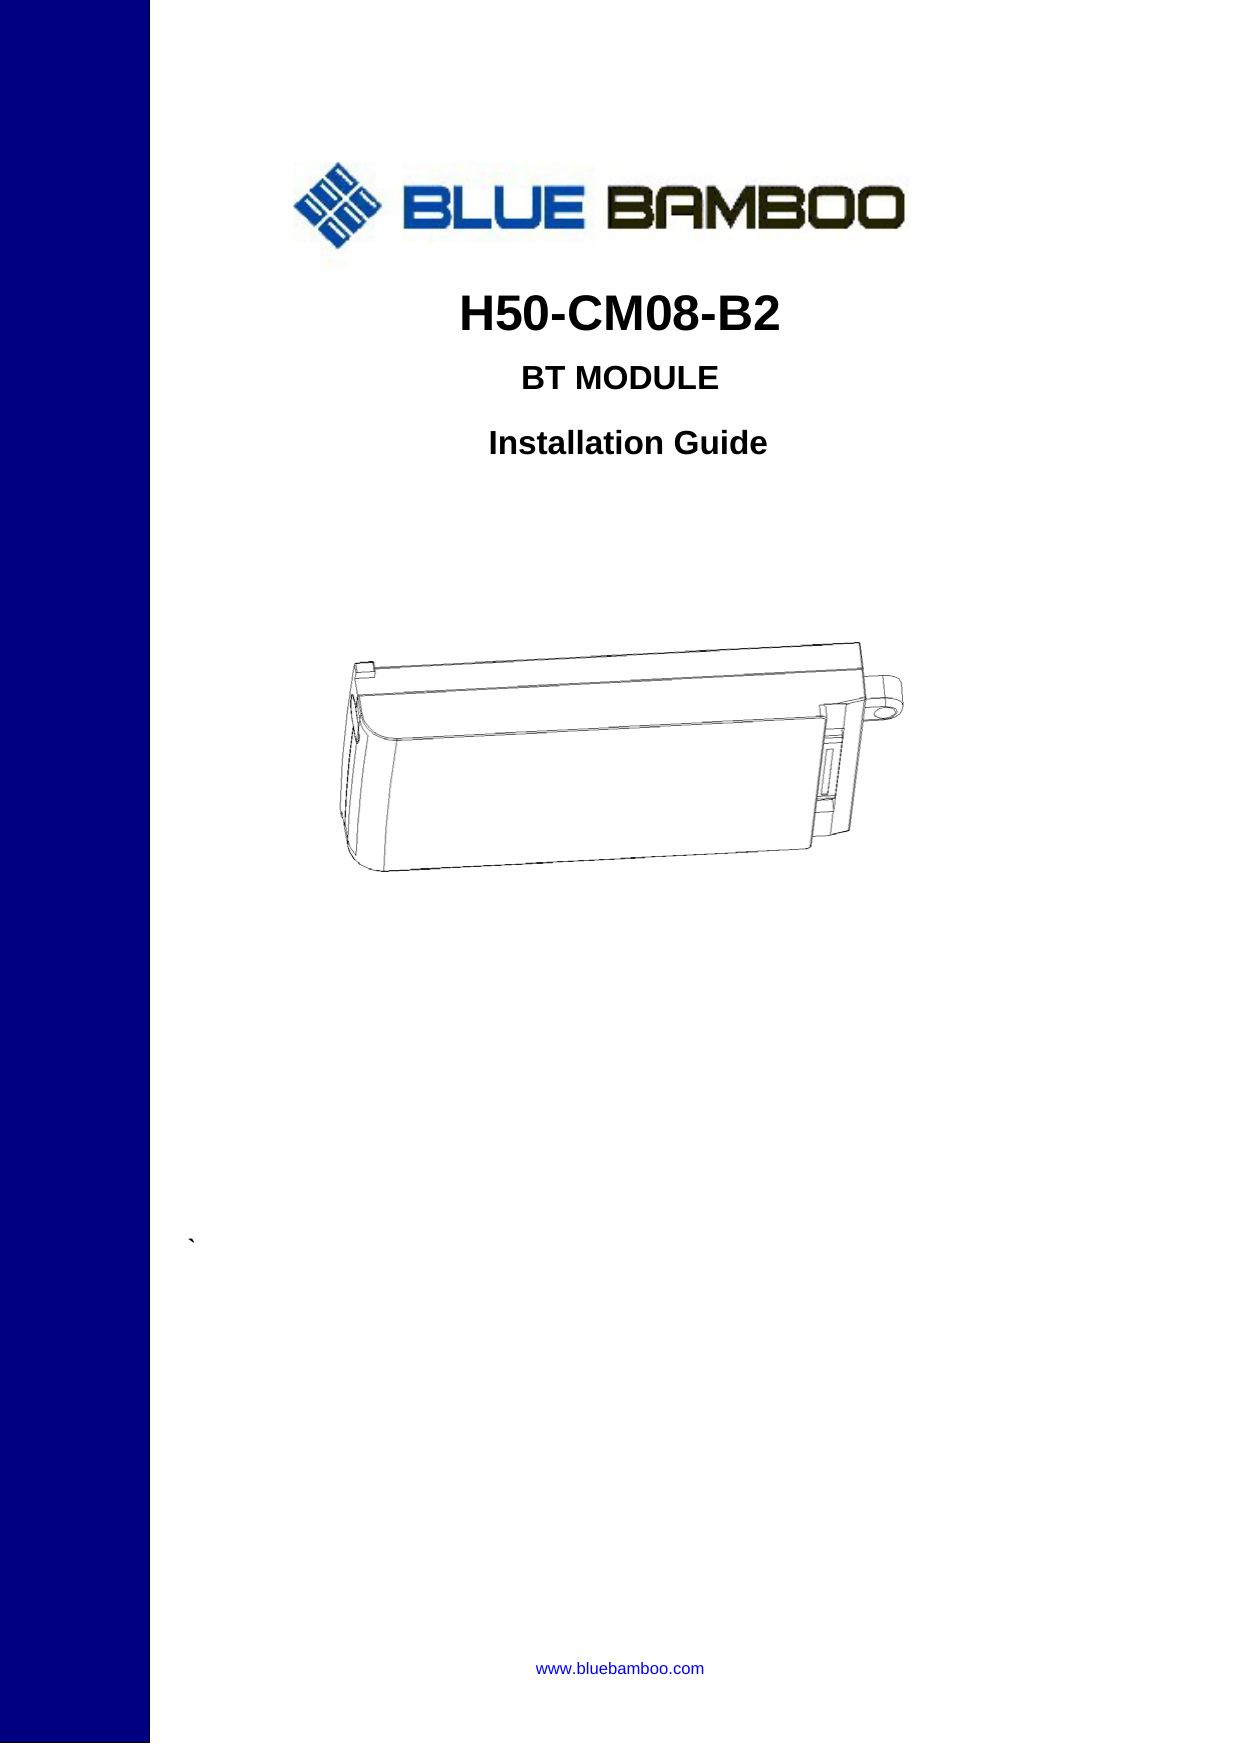 www.bluebamboo.com  H50-CM08-B2 BT MODULE  Installation Guide         `        